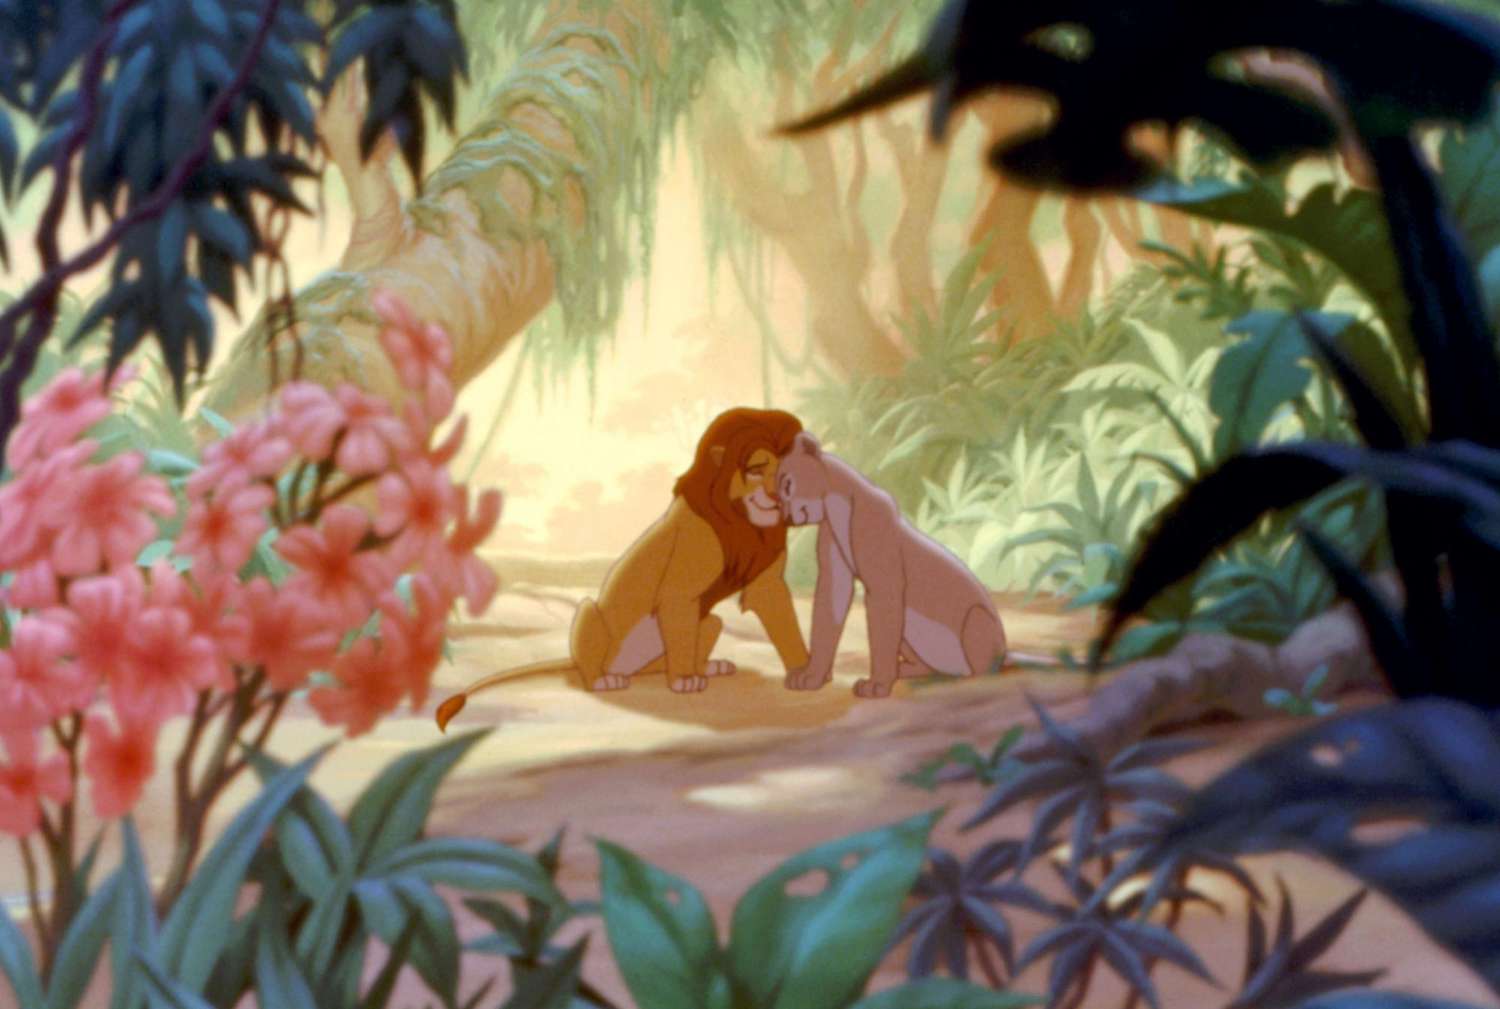 THE LION KING, Simba, voice of Matthew Broderick, Nala, voice of Moira Kelly, 1994. ©Buena Vista Pic